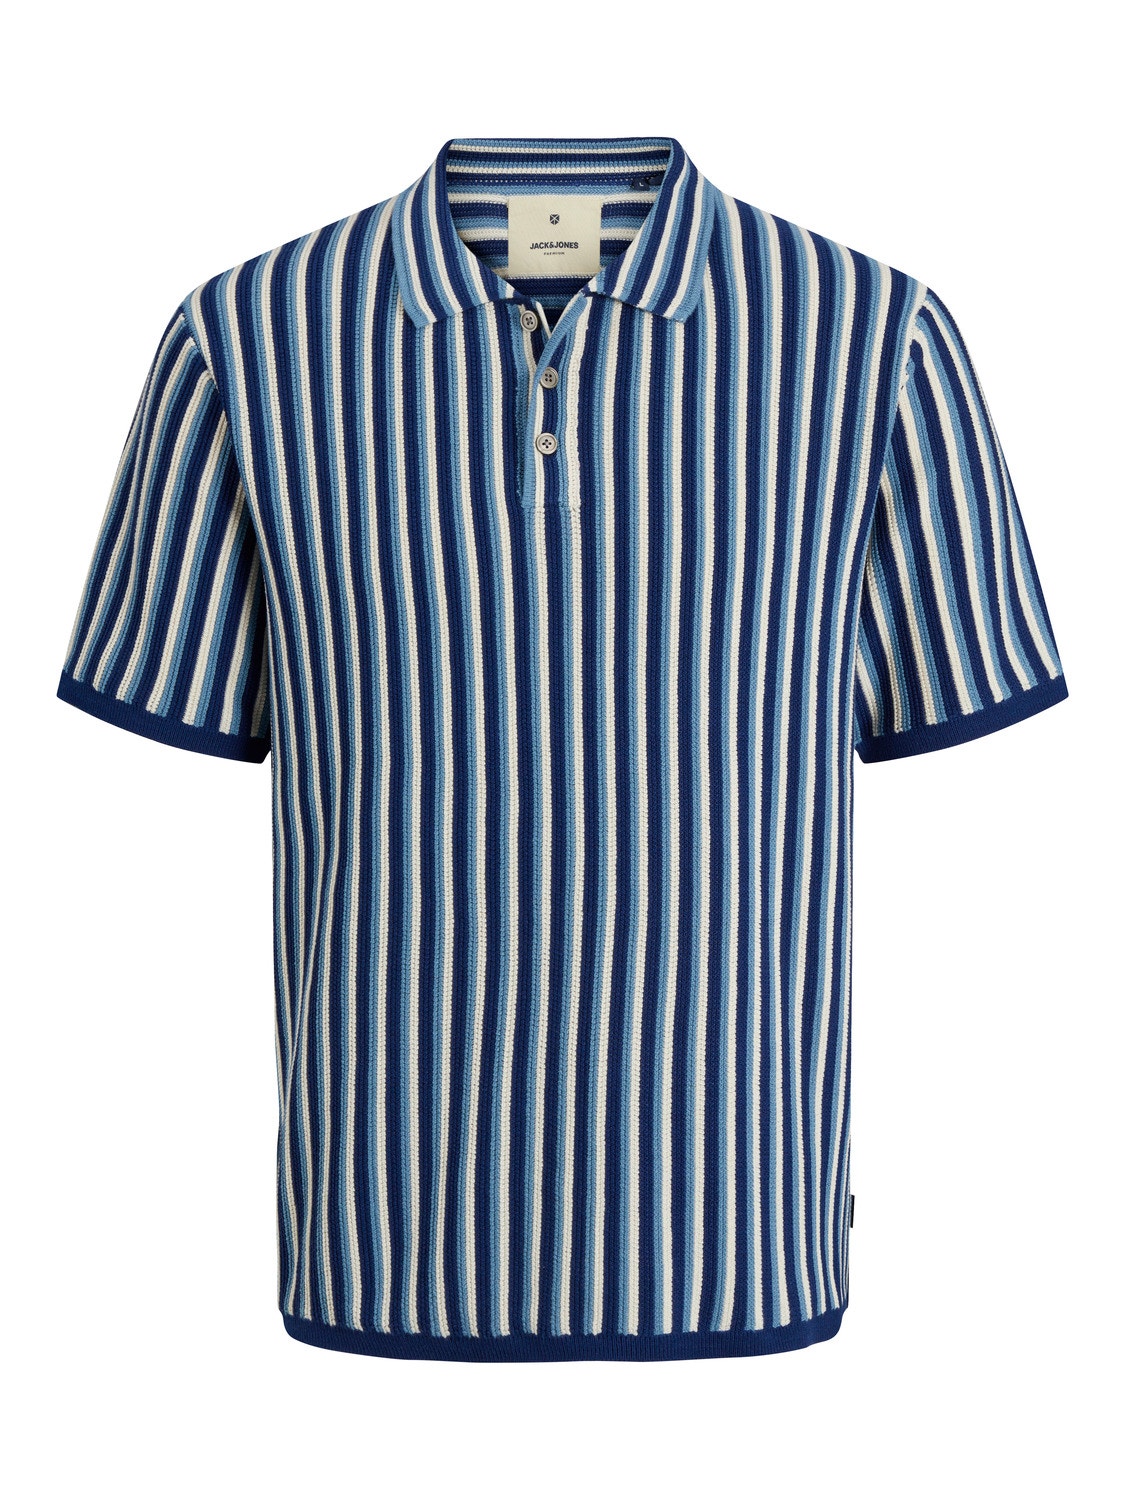 Jack & Jones Striped Polo -Blue Depths - 12255741